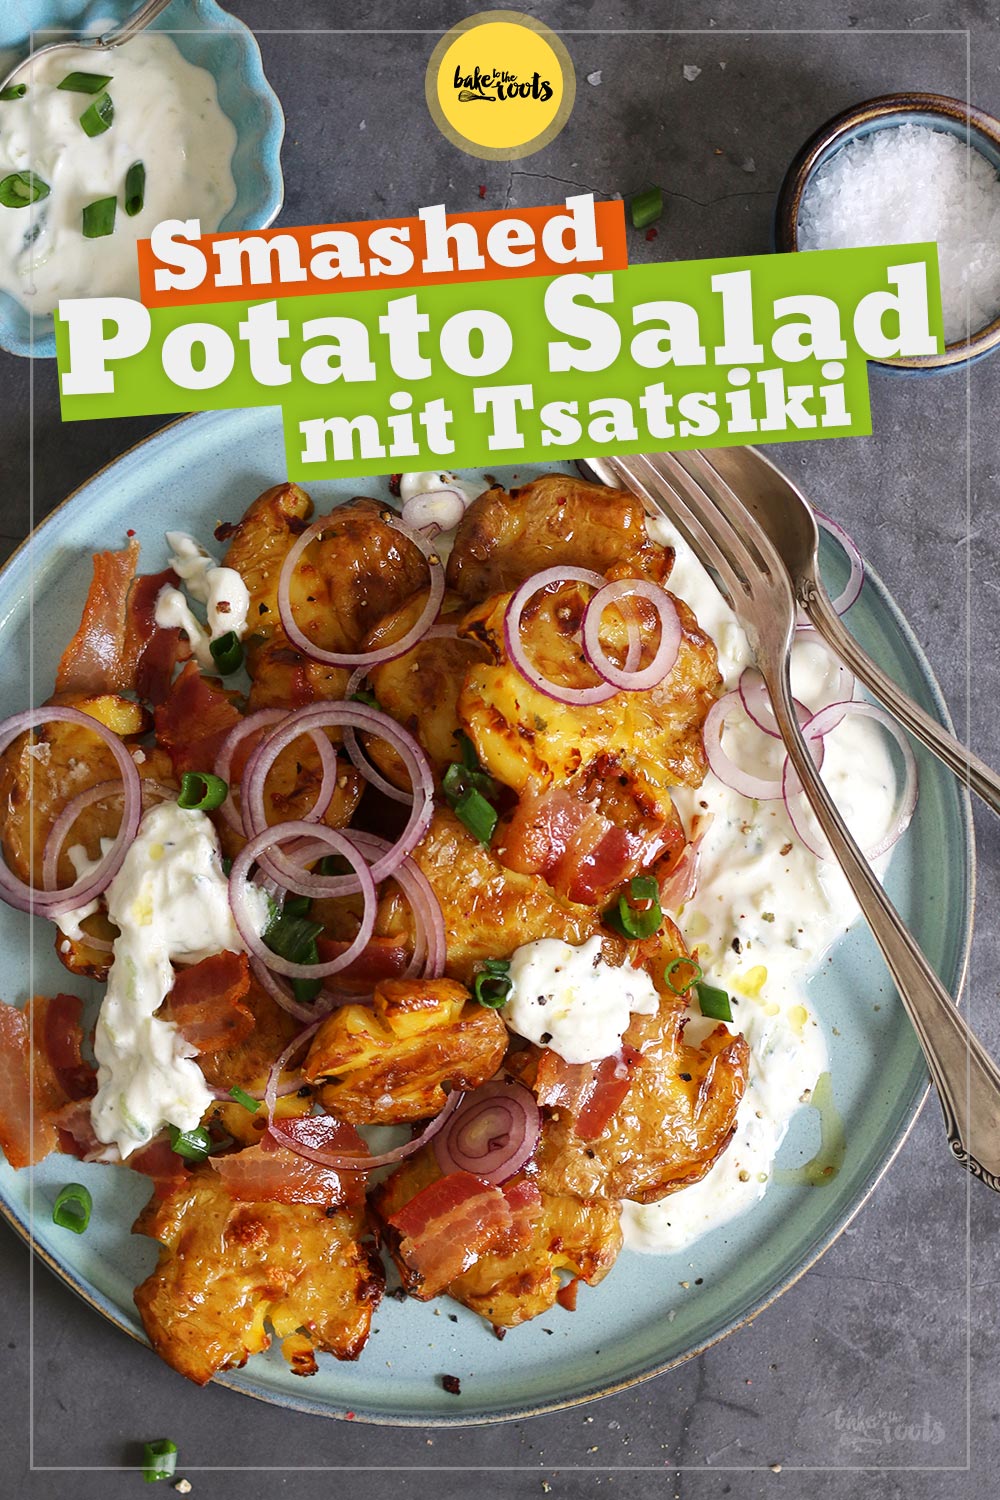 Crispy Smashed Potato Salad mit Bacon & Tsatsiki | Bake to the roots